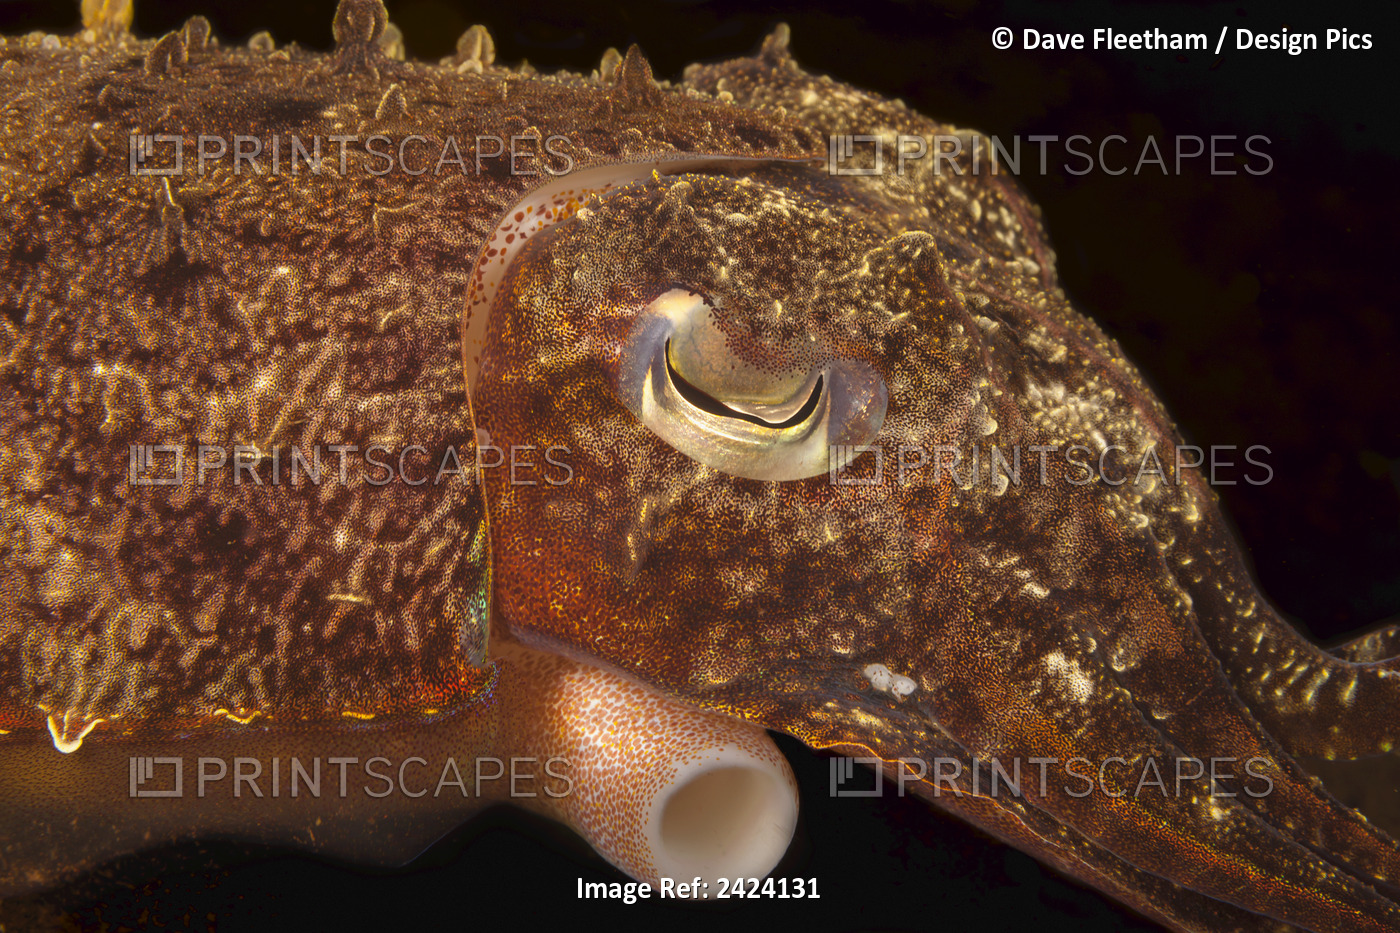 A Broadclub Cuttlefish (Sepia Latimanus); Bali, Indonesia